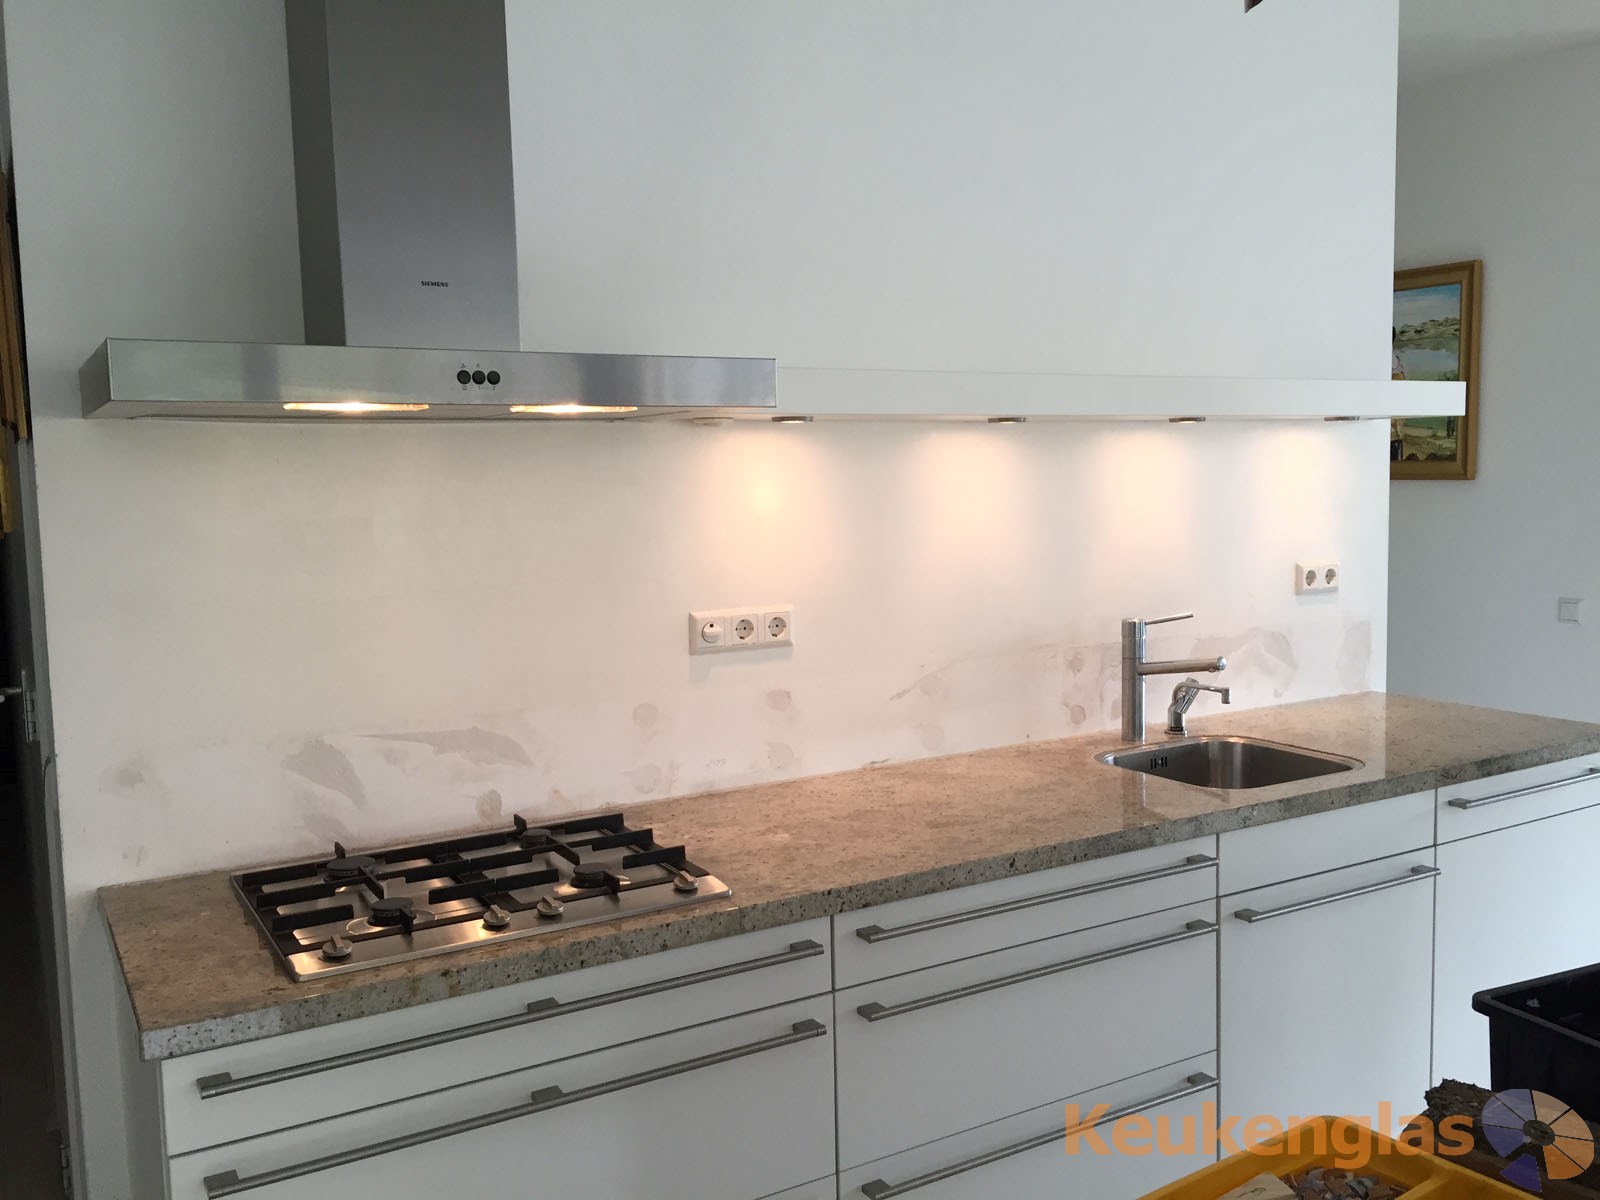 Witte moderne keuken Leidschendam - voor plaatsing glazen keuken achterwand